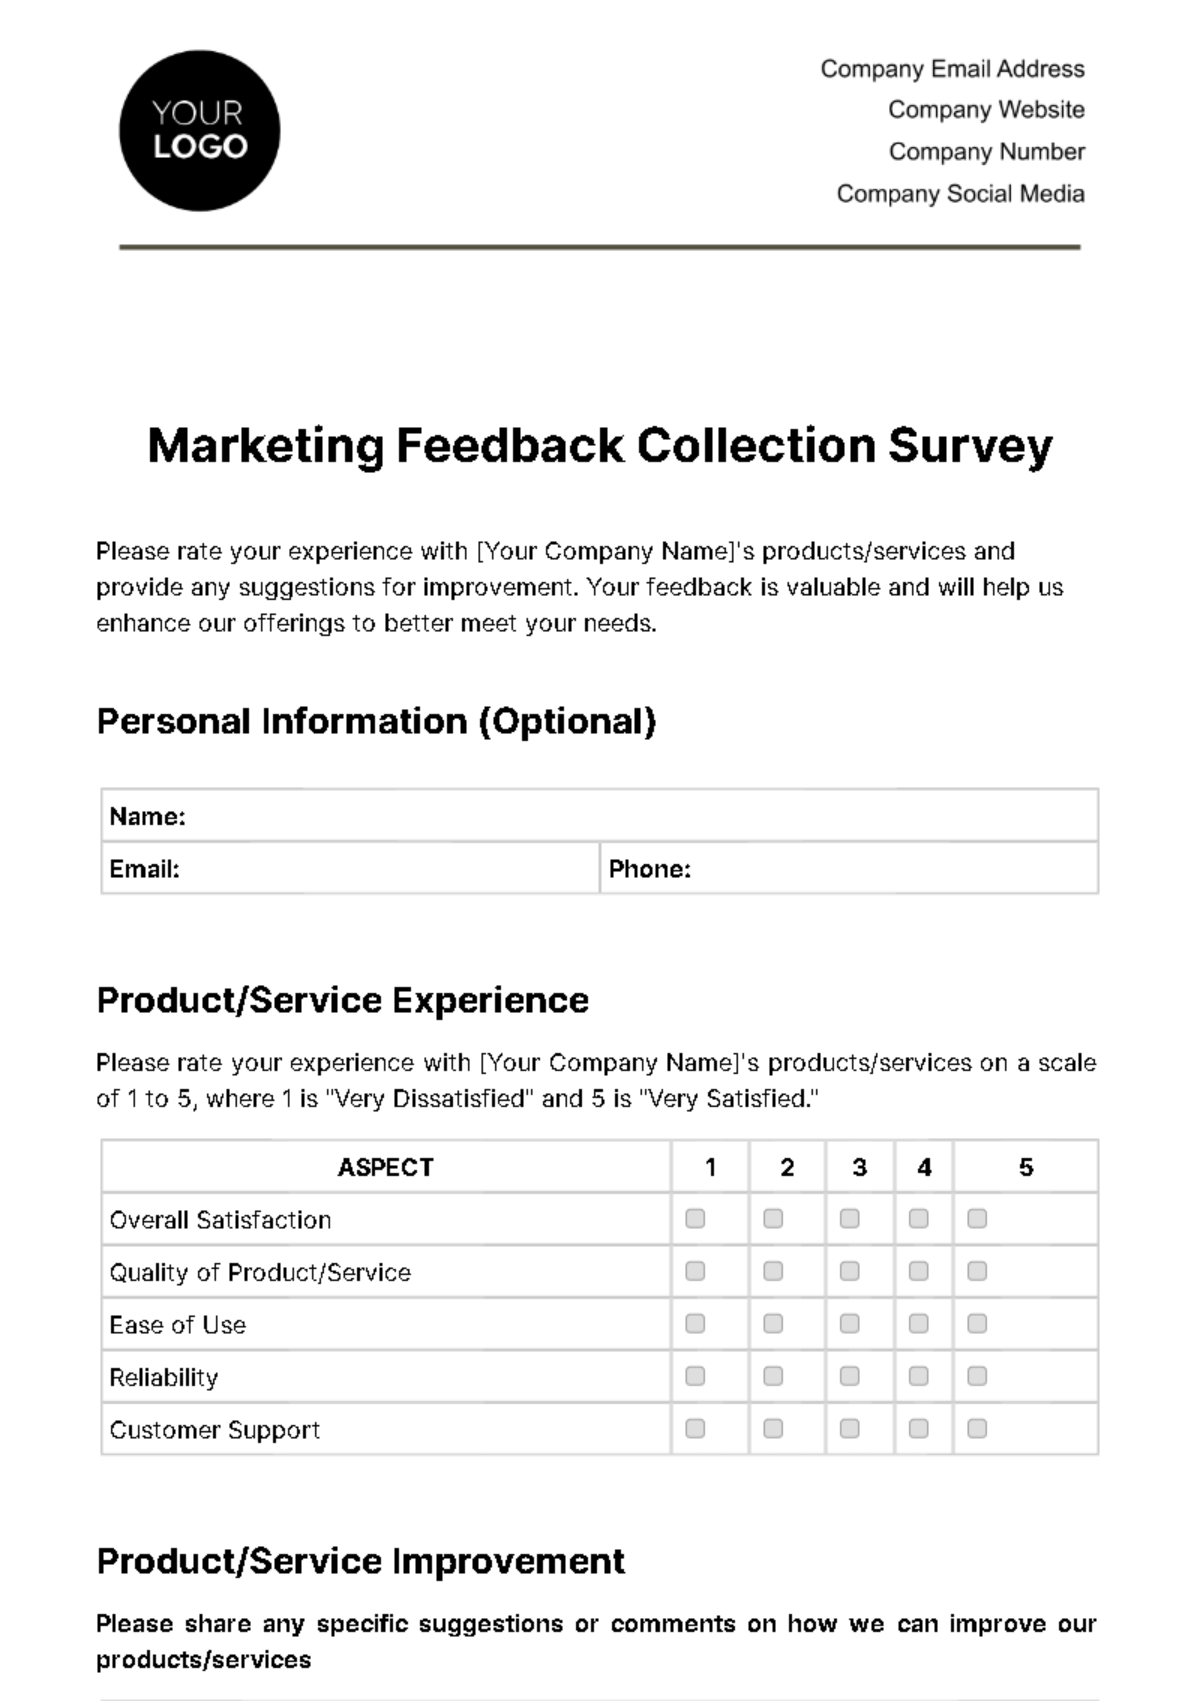 Marketing Feedback Collection Survey Template